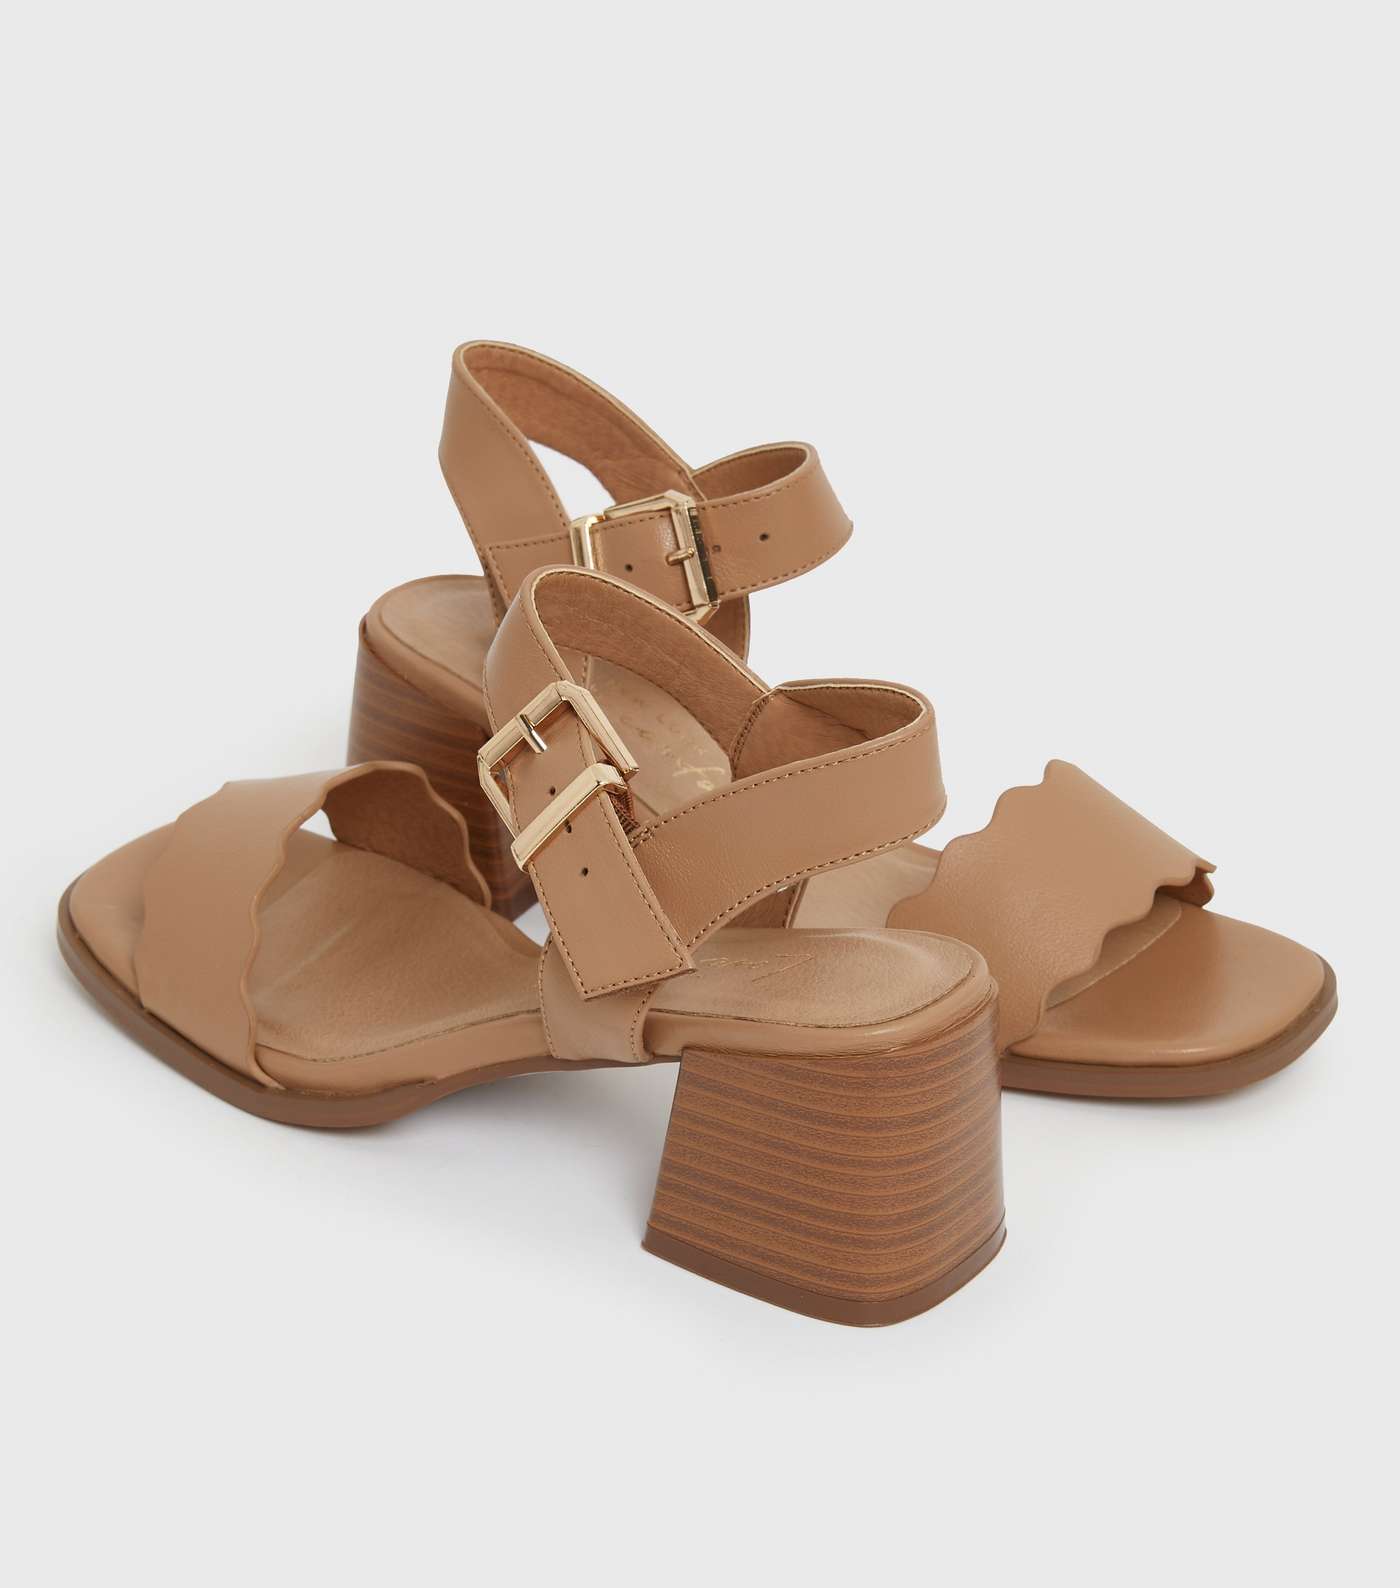 Tan Leather-Look Scalloped 2 Part Block Heel Sandals Image 3